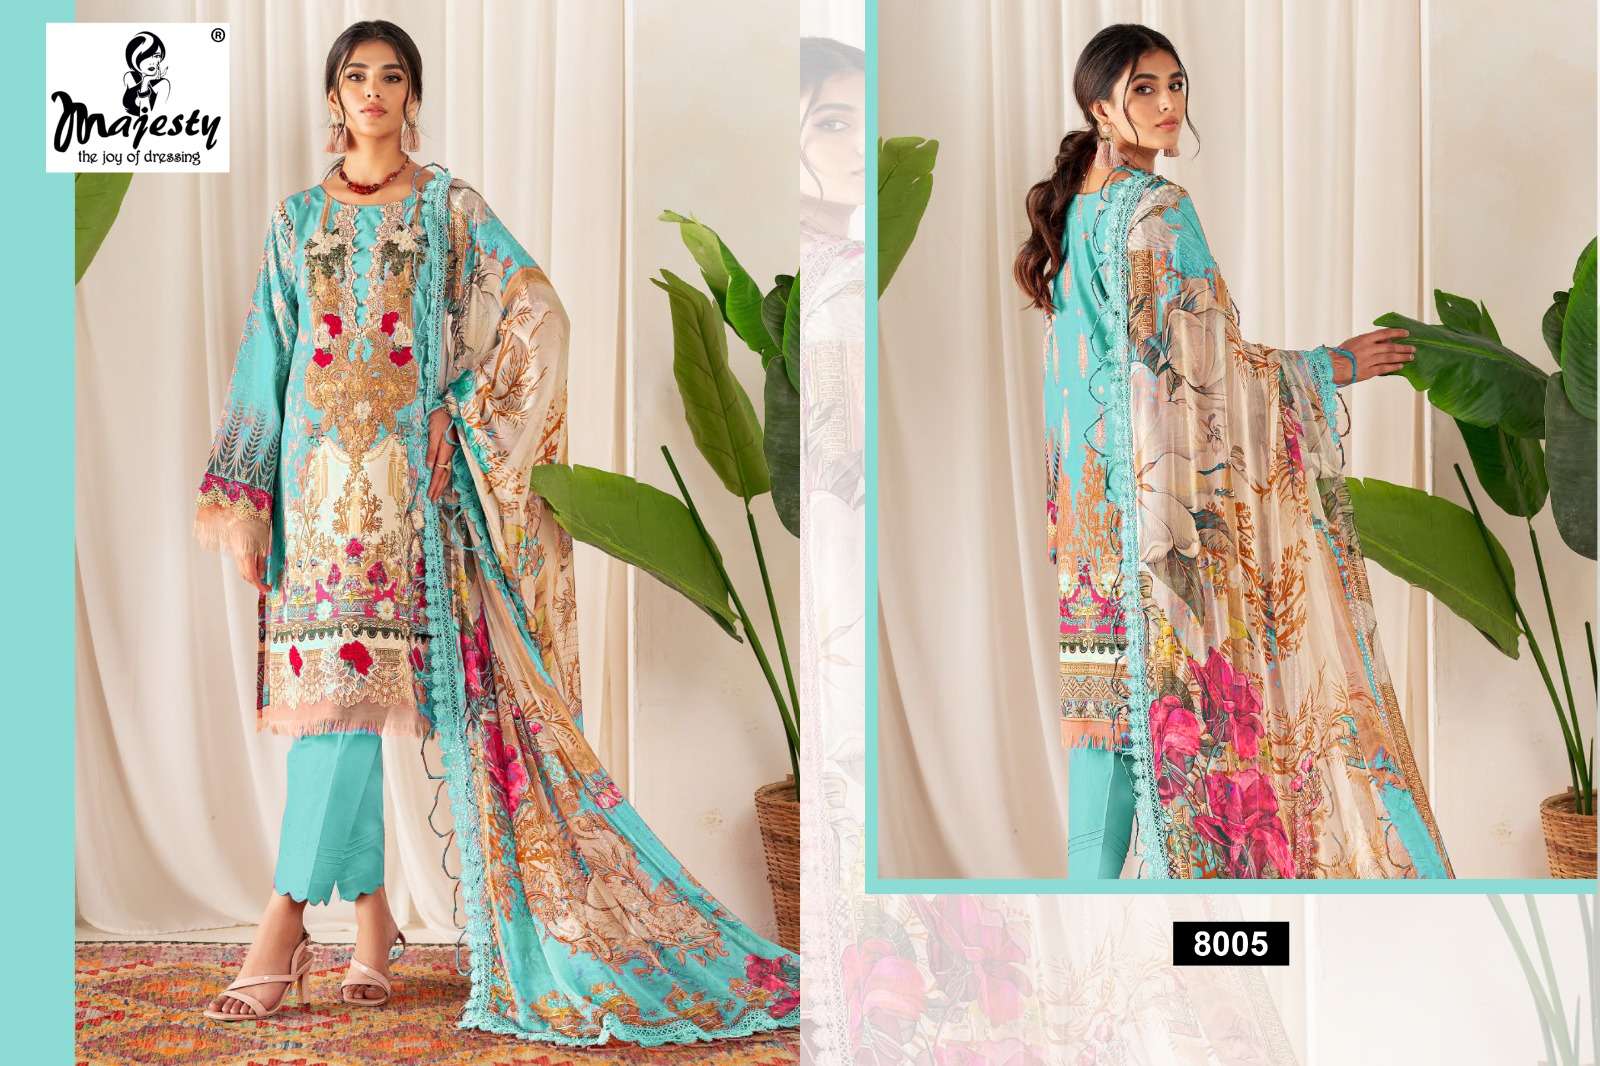 majesty cheveron lawn vol-8 8001-8006 series jam cotton designer salwar kameez catalogue design 2023